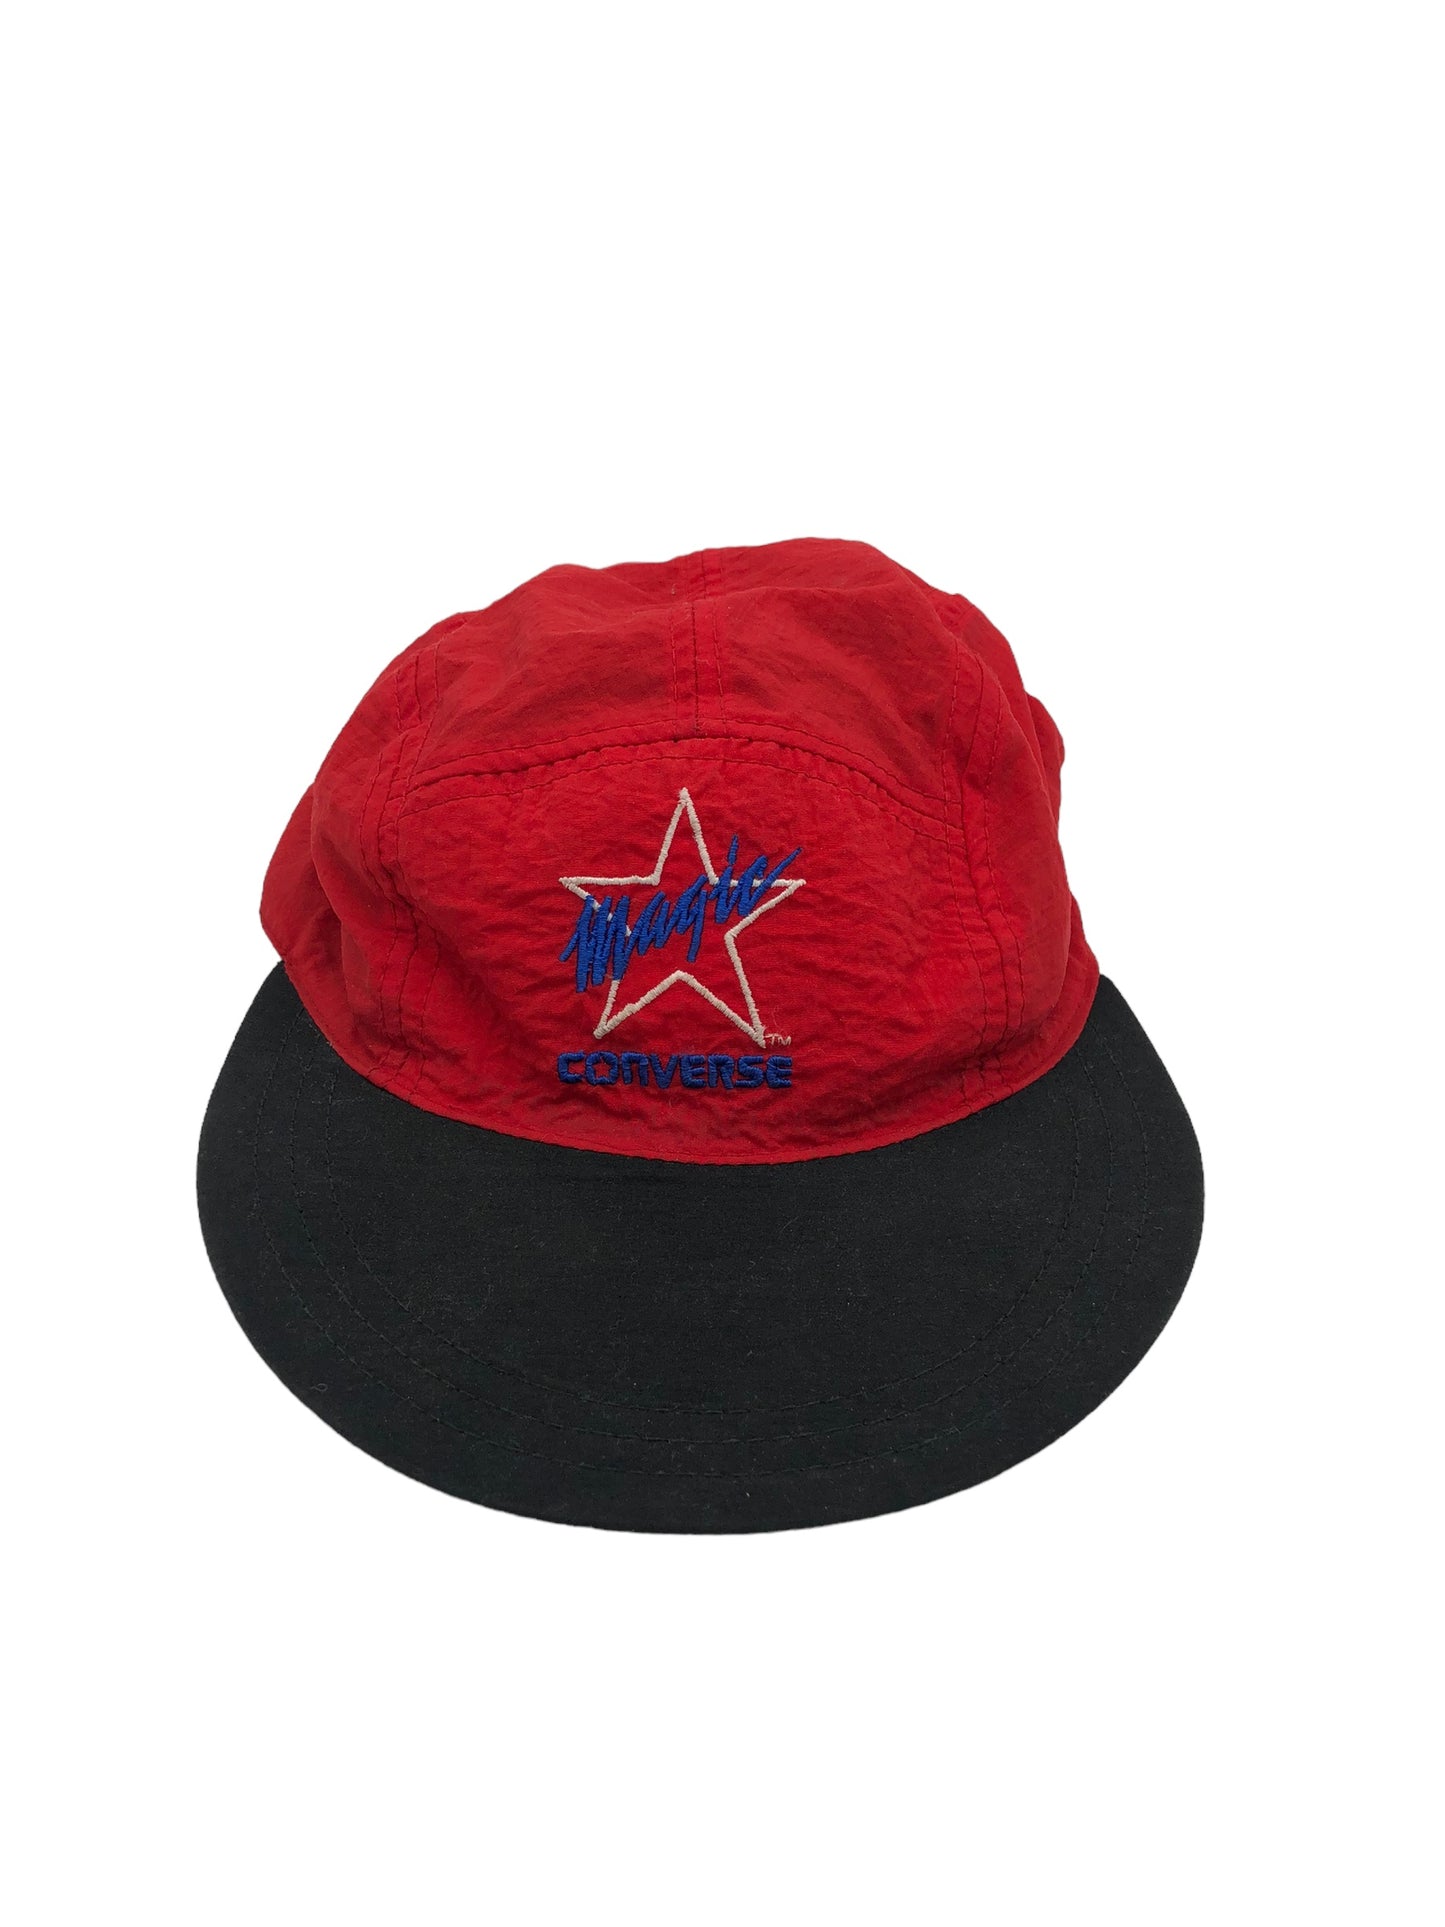 VTG Converse All Star Reversible Red Nylon Hat